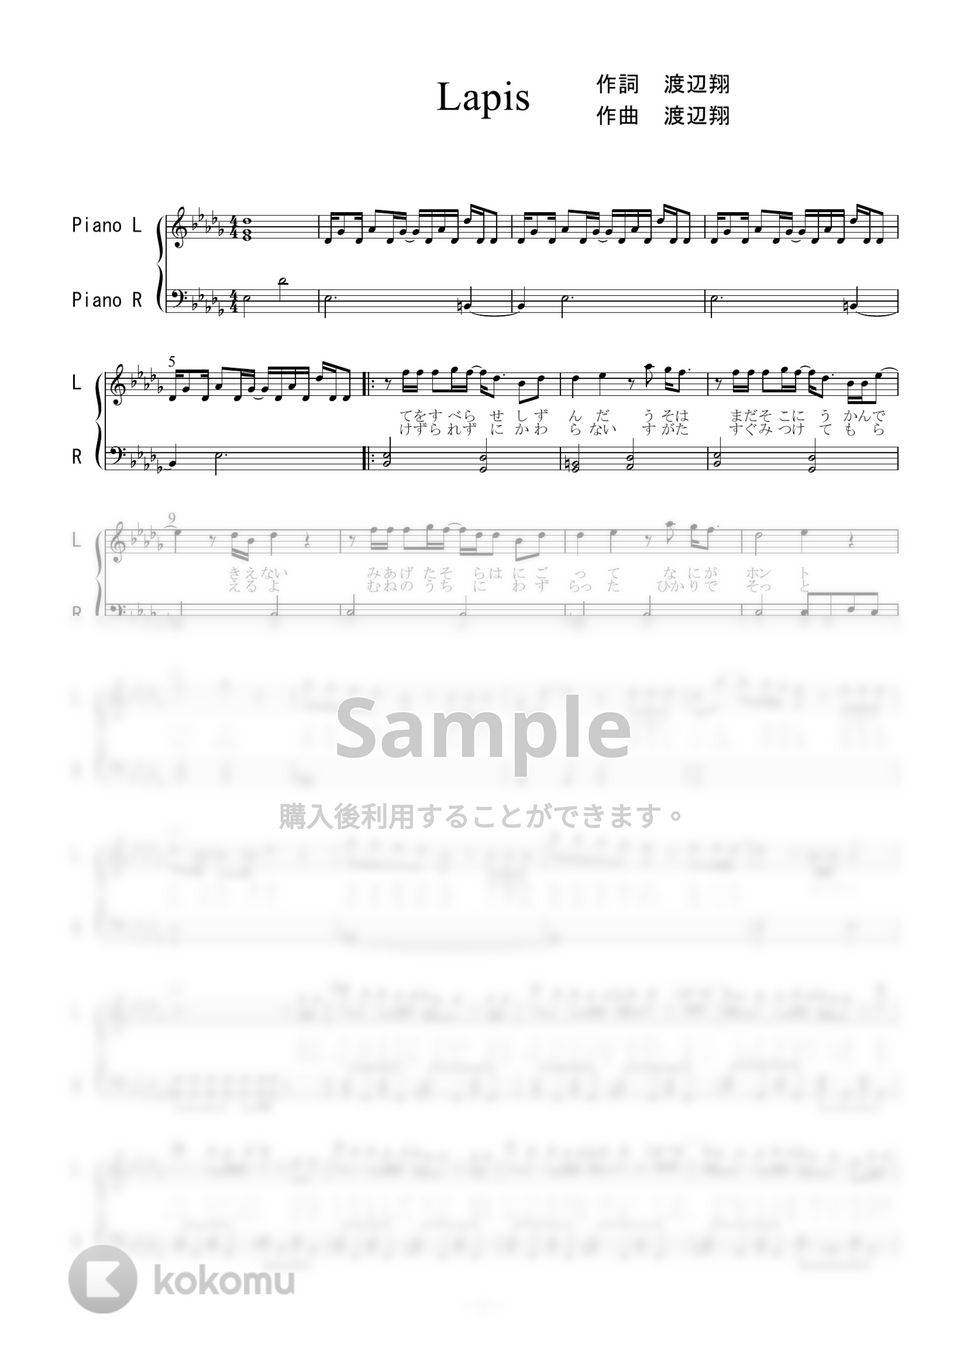 TrySail - Lapis (ピアノソロ) by 二次元楽譜製作所